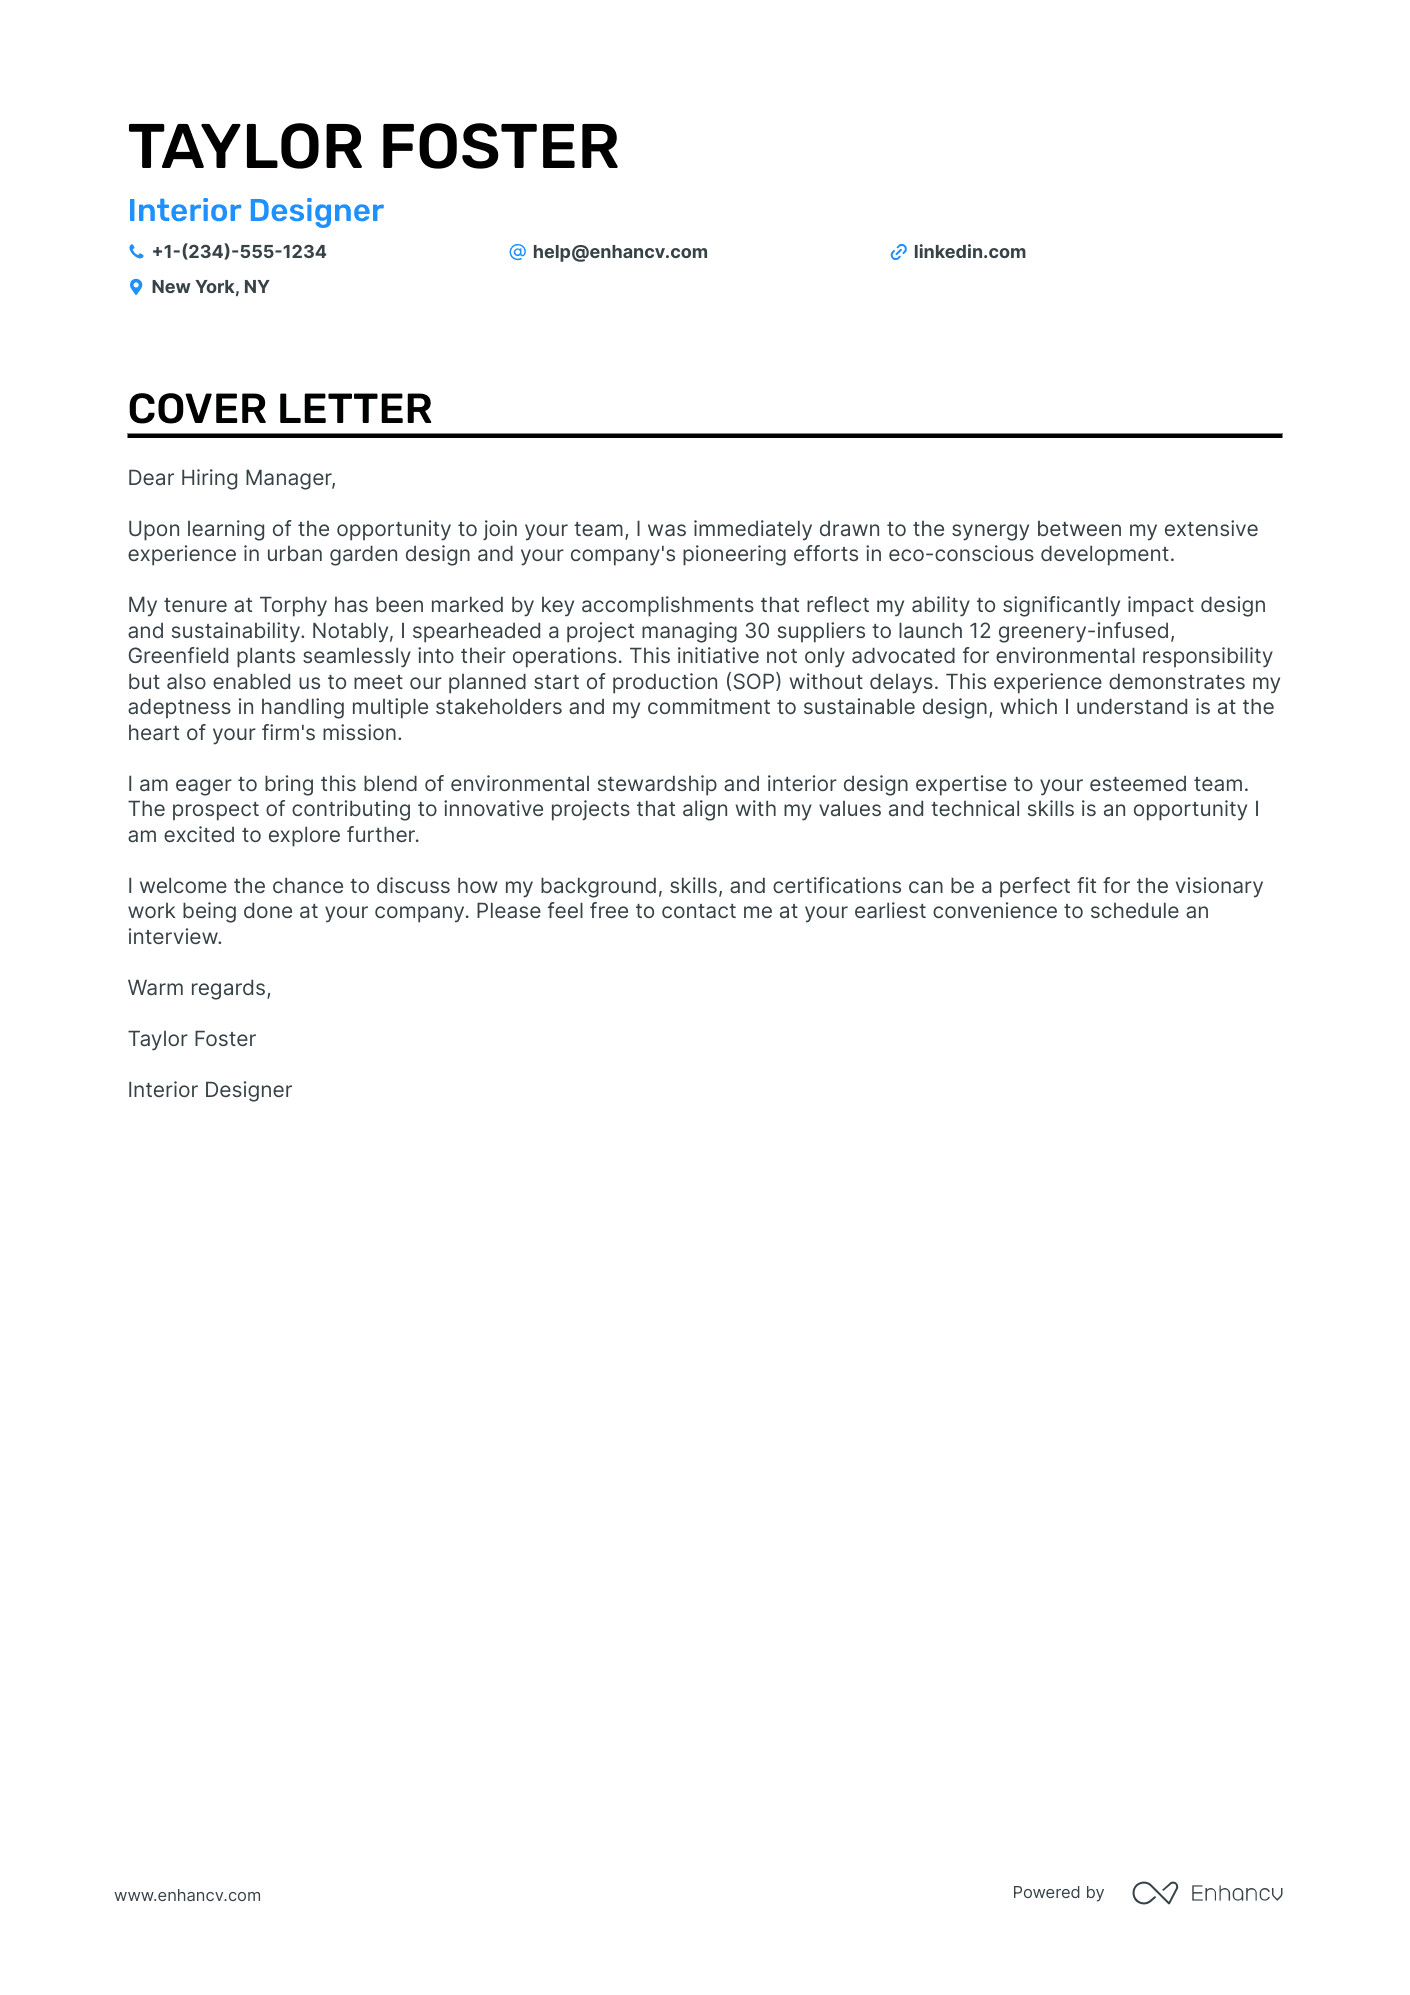 Interior Designer cover letter